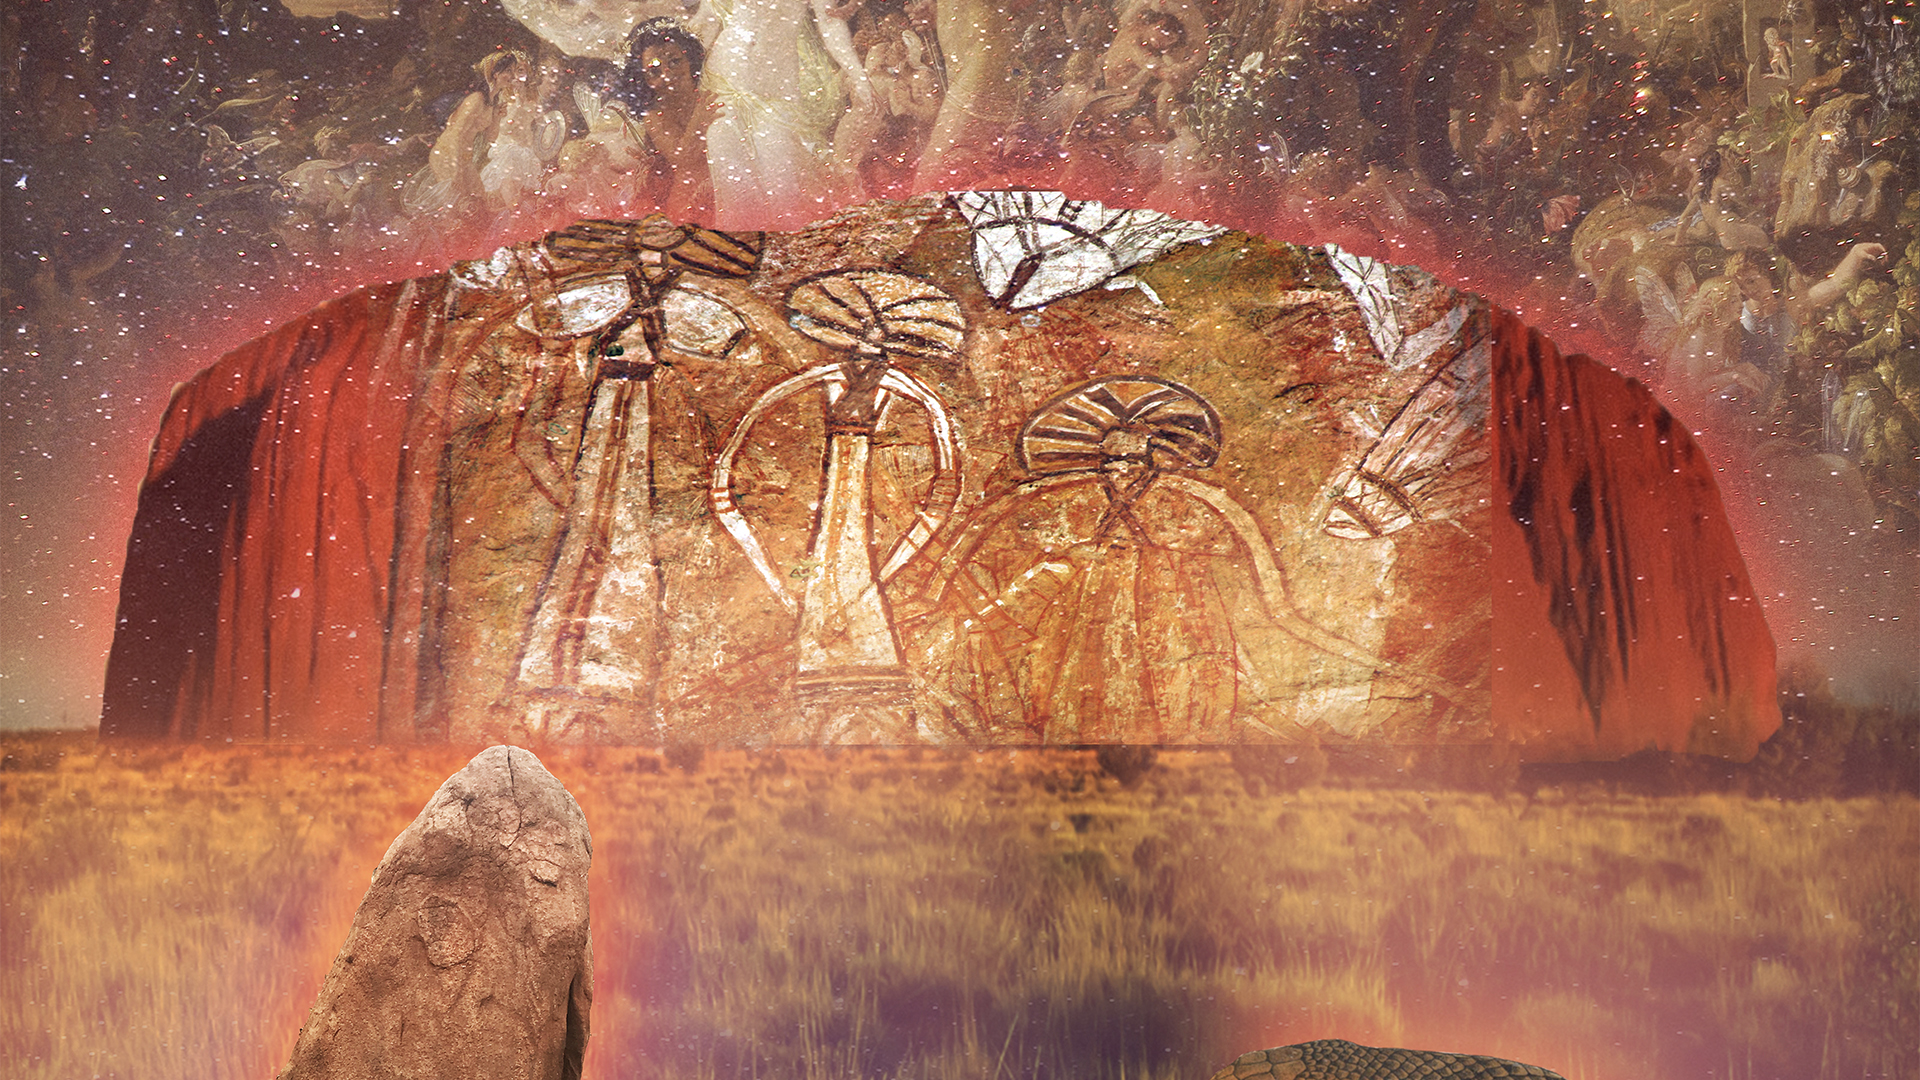 Uluru, Australia overlaid with aboriginal art to represent spiritual empowerment